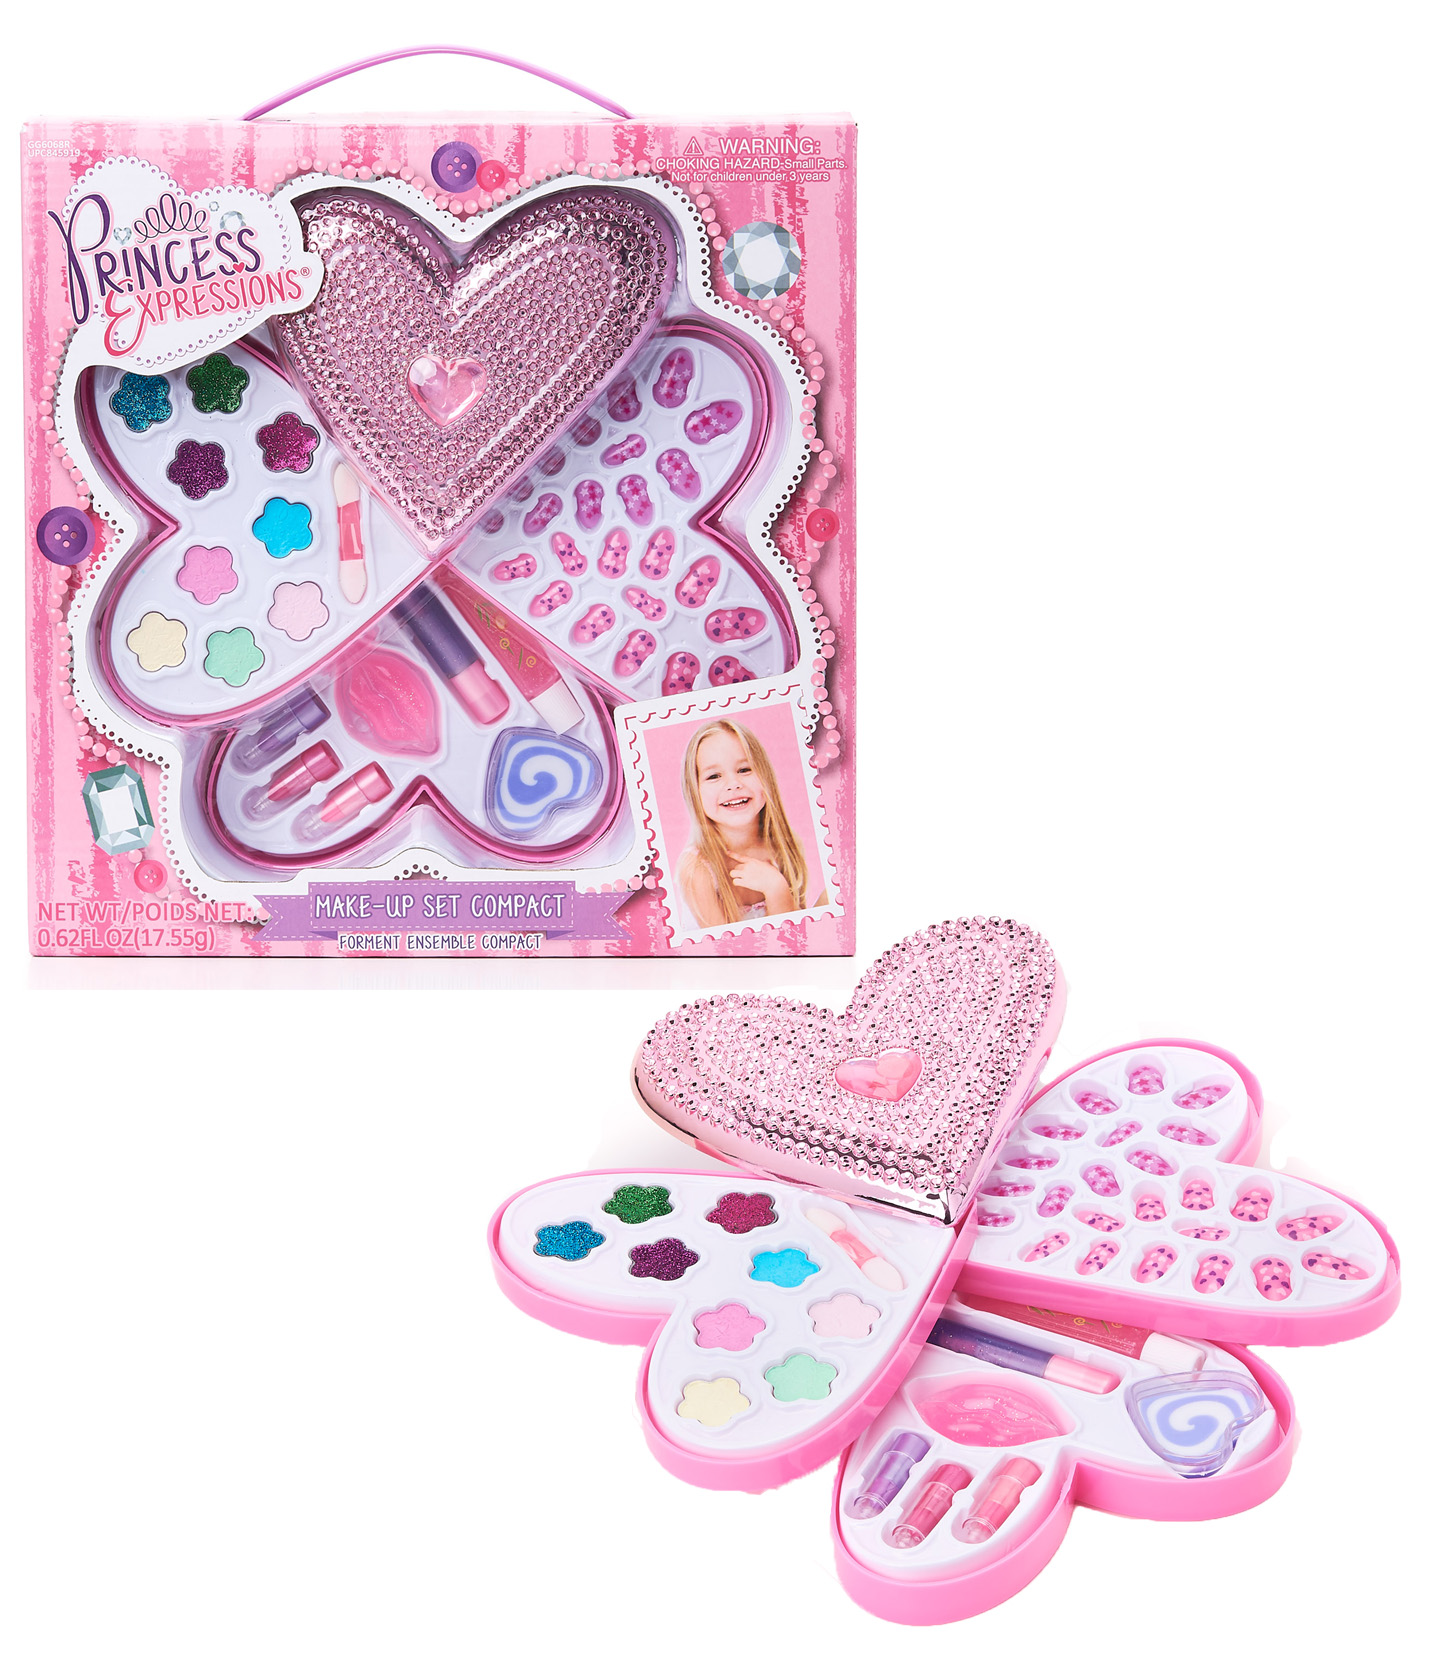 Princess Expressions Heart-Shaped Makeup Kit